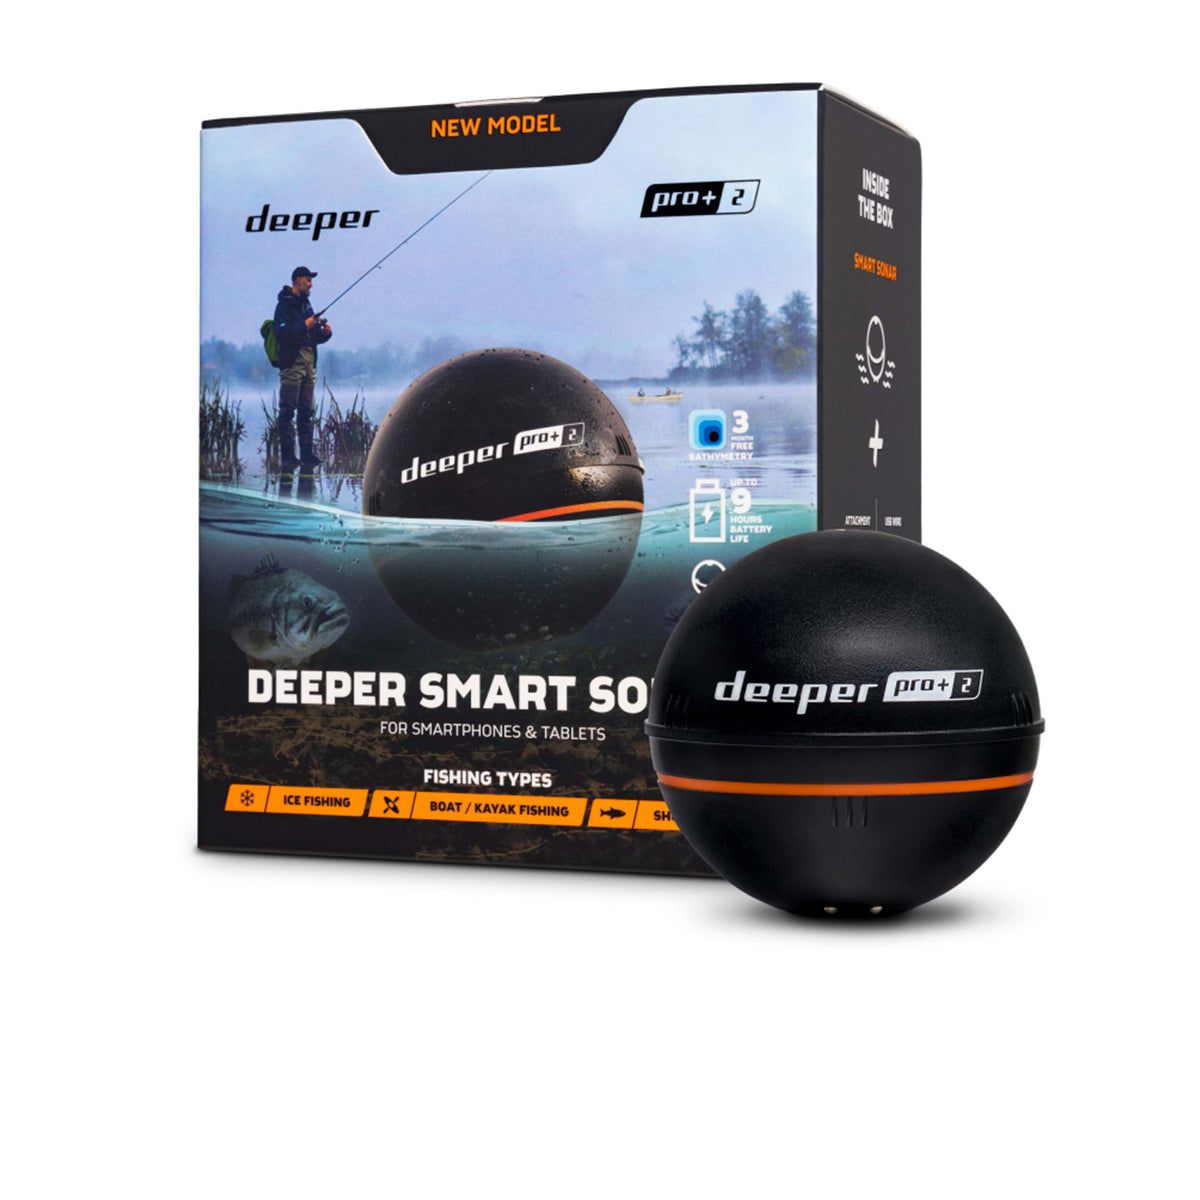 Deeper Smart Sonar Pro+ 2